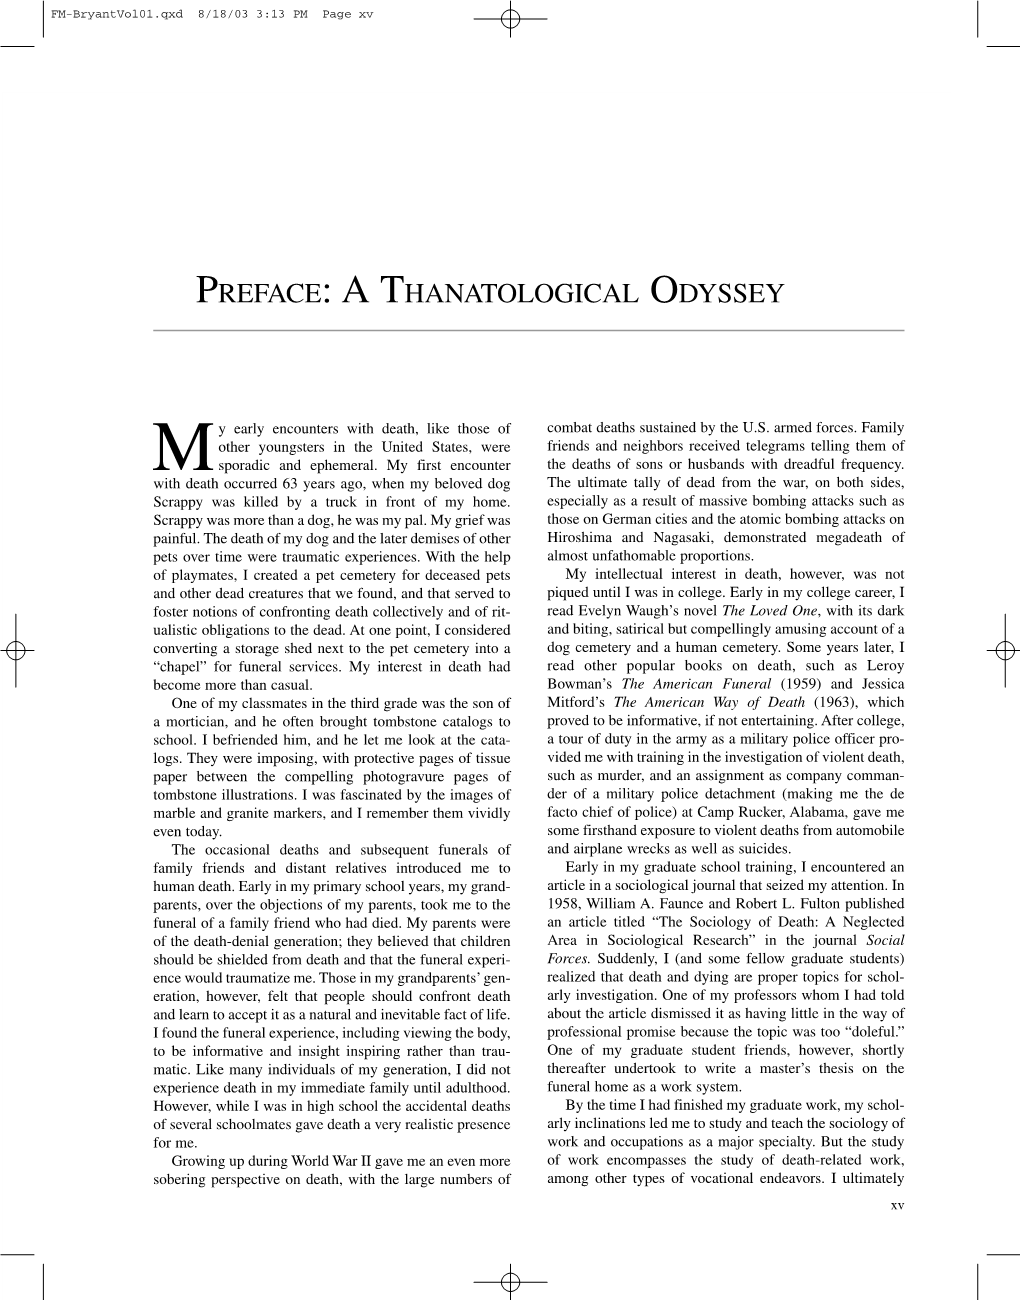 Preface:A Thanatological Odyssey